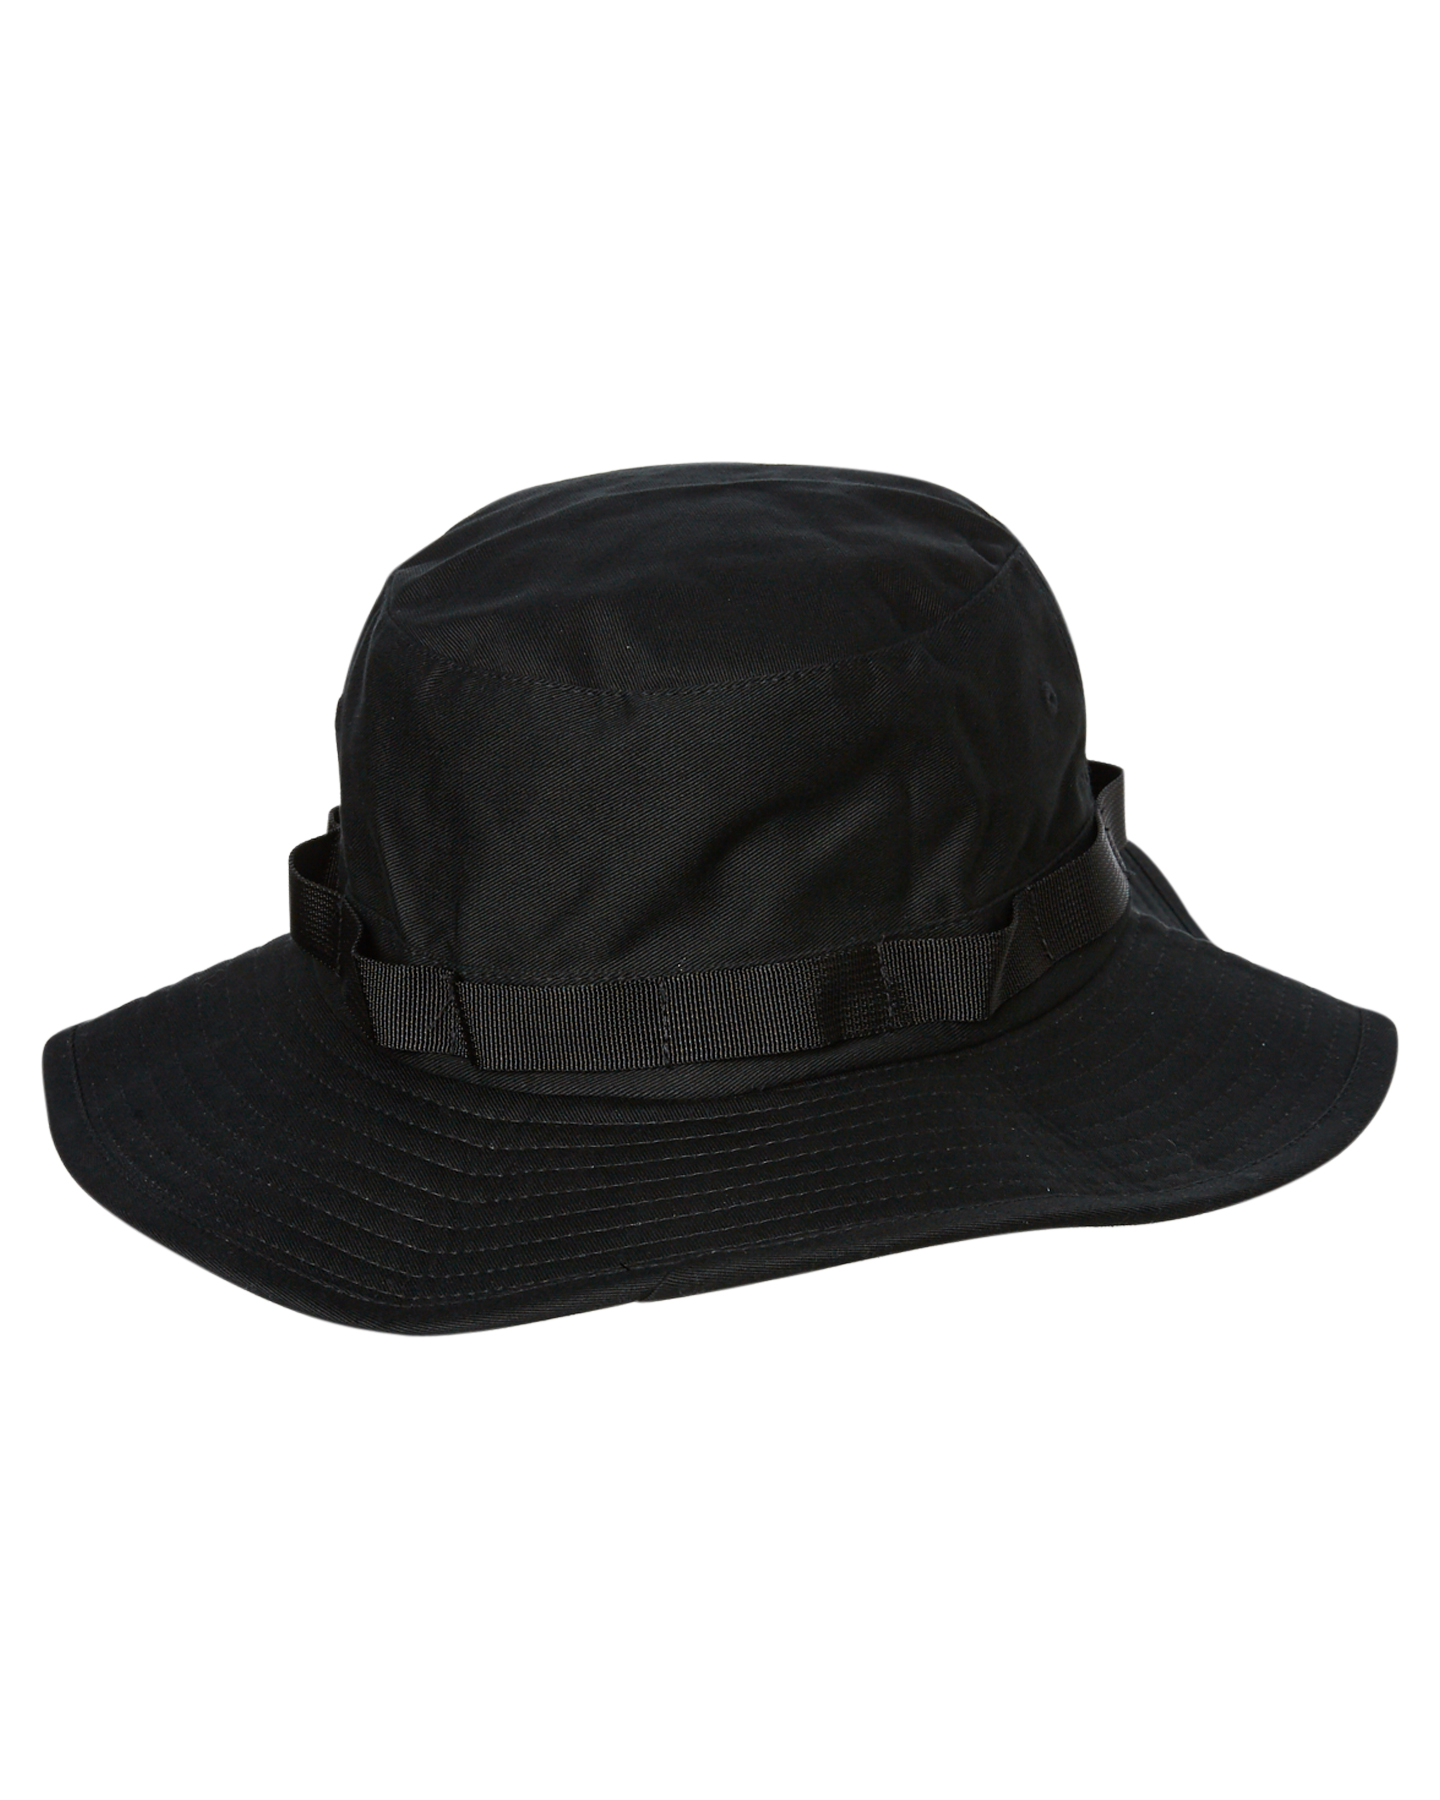 Hurley Vagabond Mens Hat - Black | SurfStitch